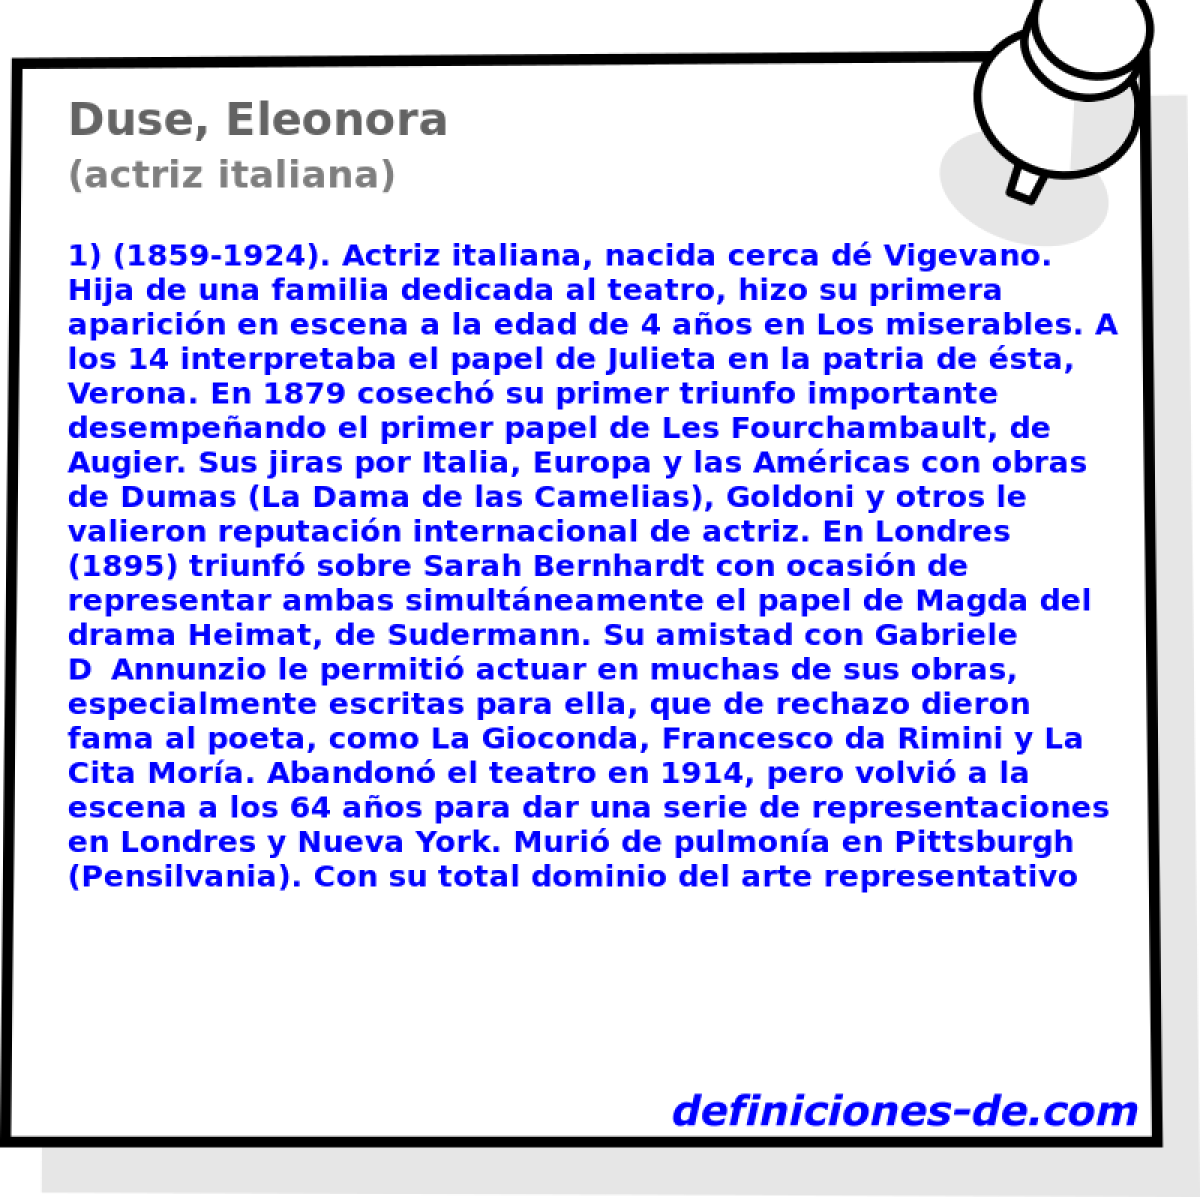 Duse, Eleonora (actriz italiana)